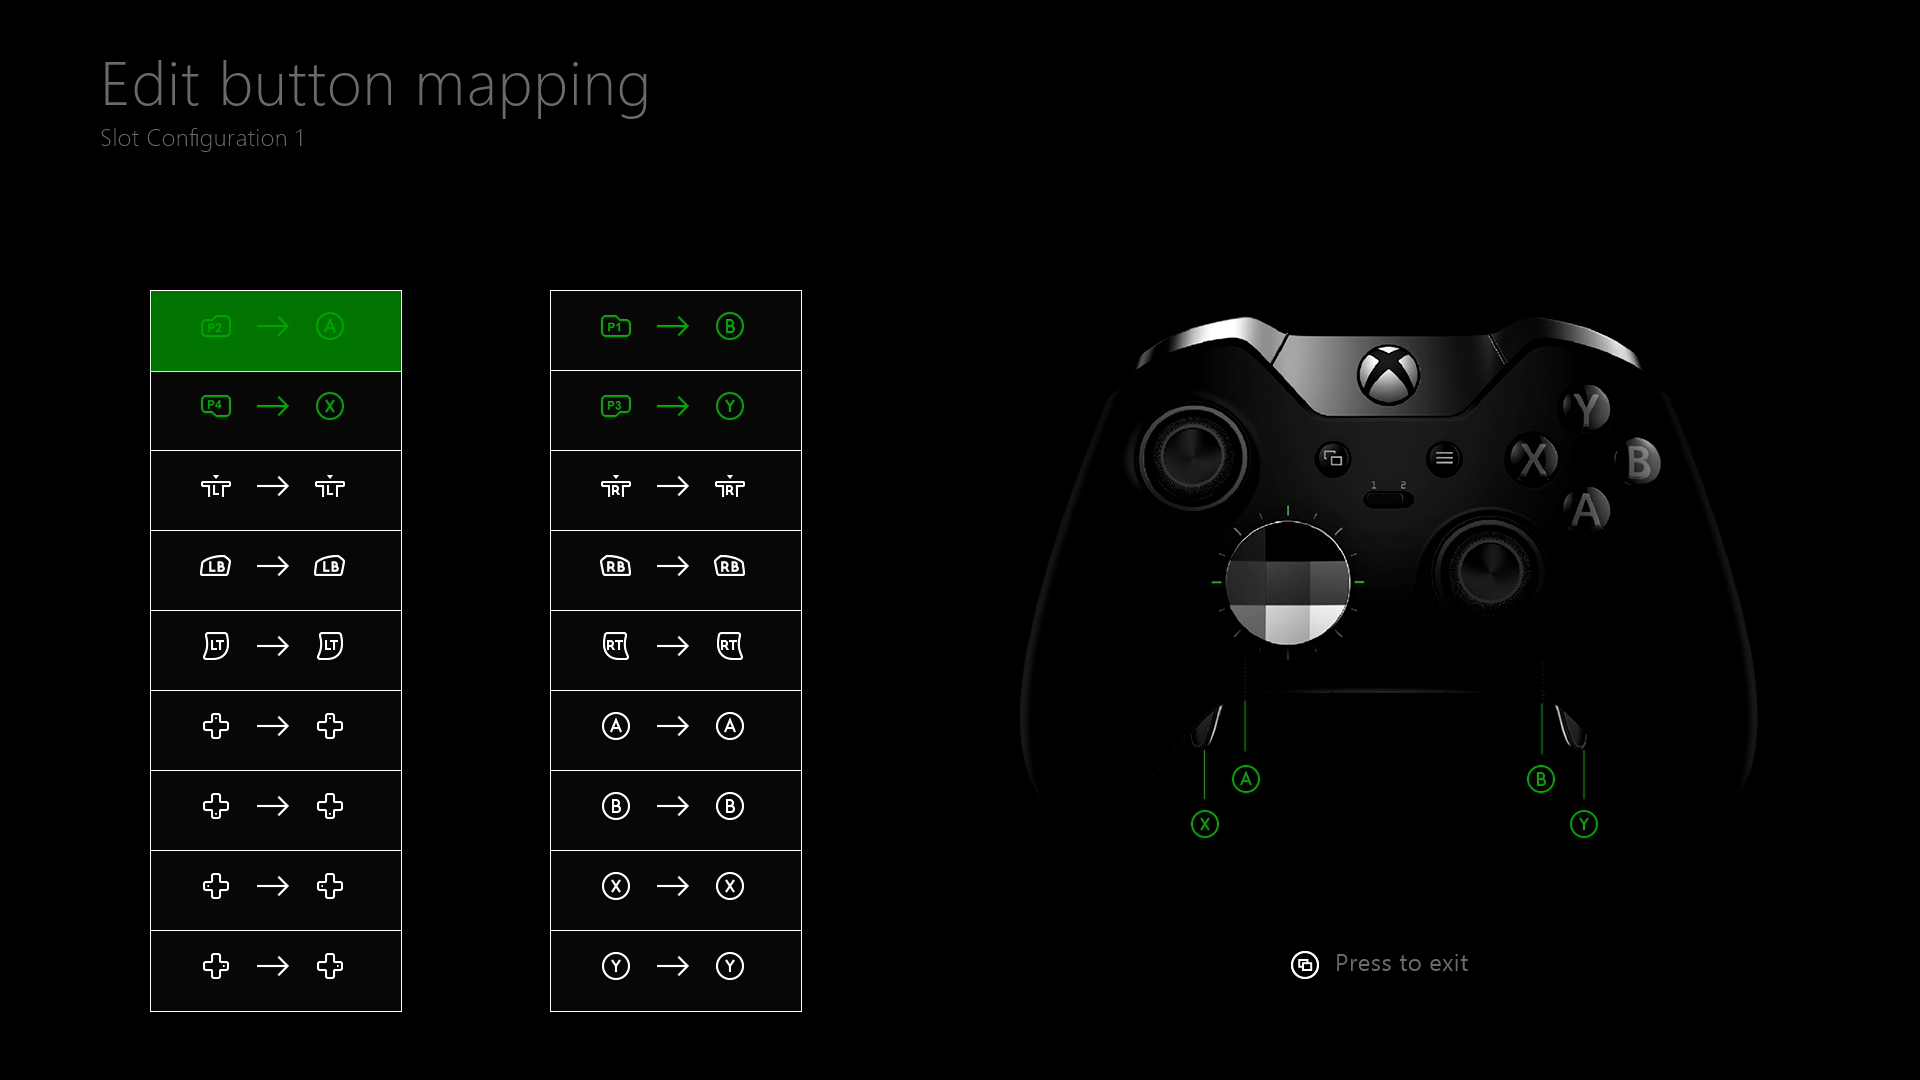 Site lijn wit De kamer schoonmaken Xbox One Elite controller review: A better gamepad at a steep price |  Engadget